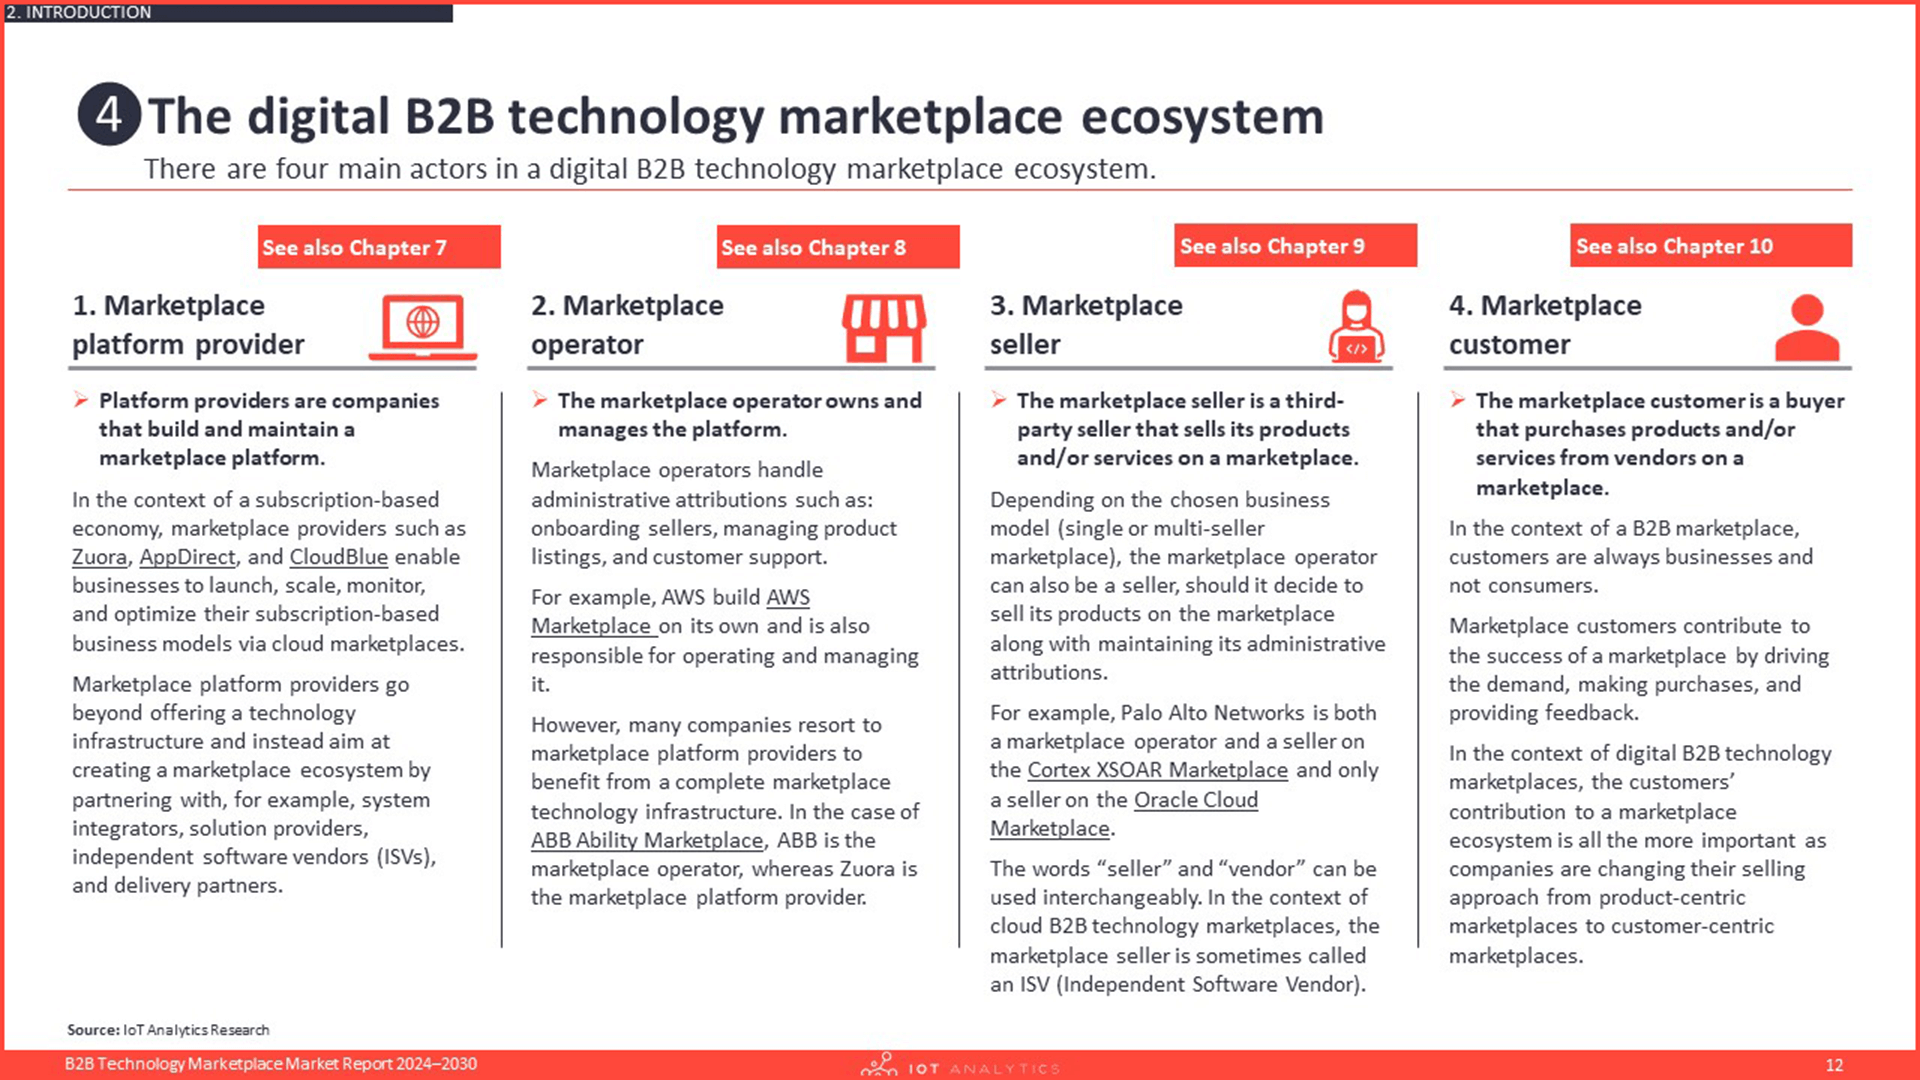 Digital B2B technology marketplaces ecosystem